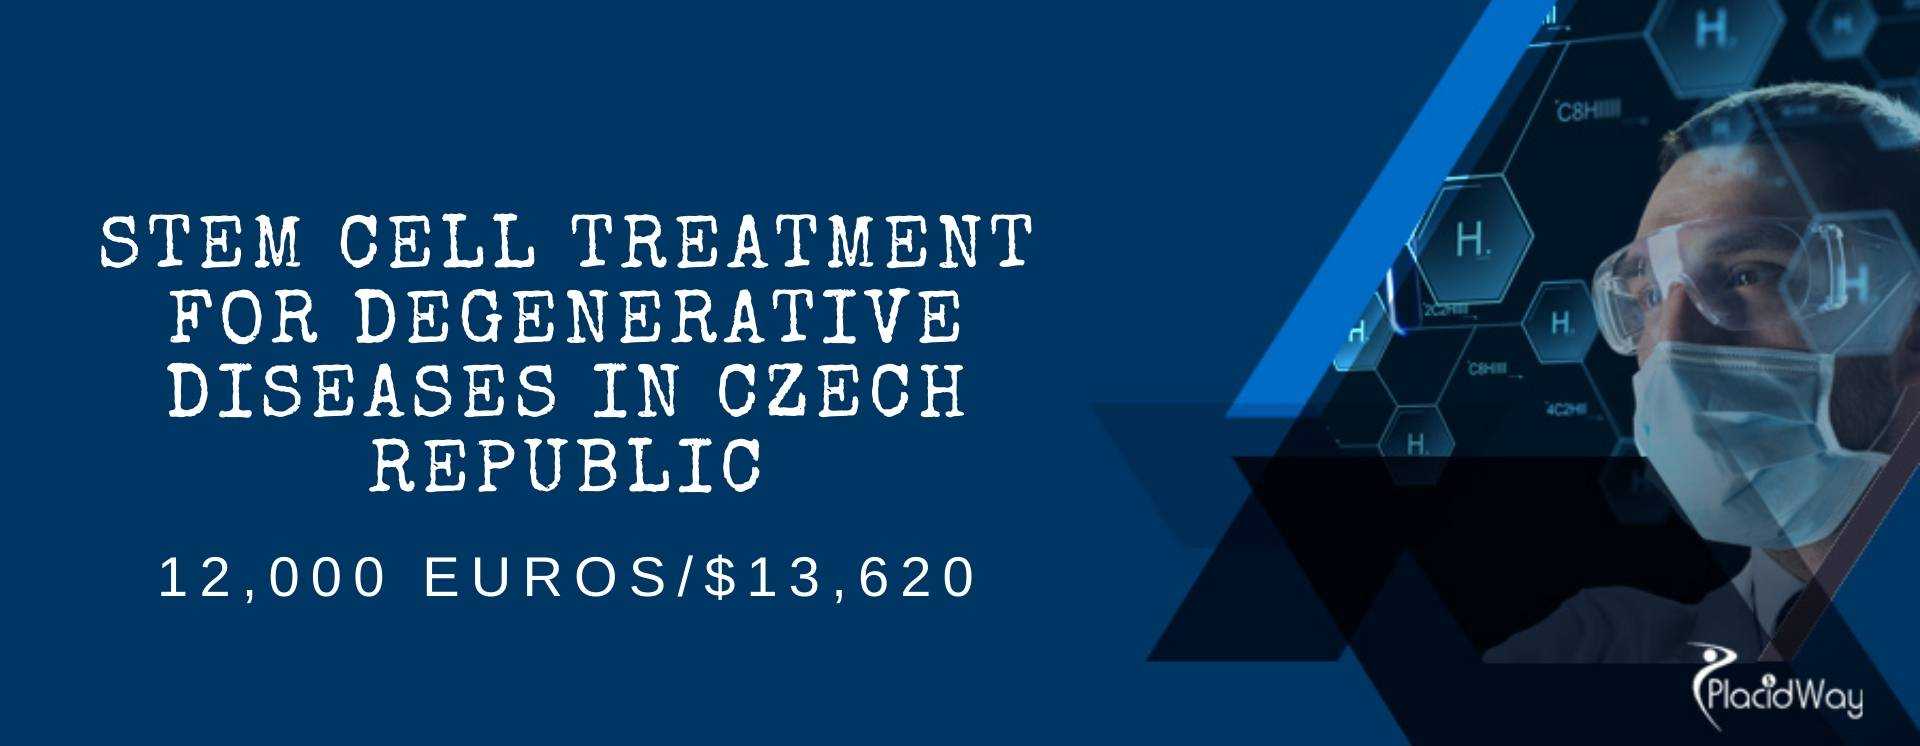 Stem Cell Treatment for Degenerative Diseases in Czech Republic